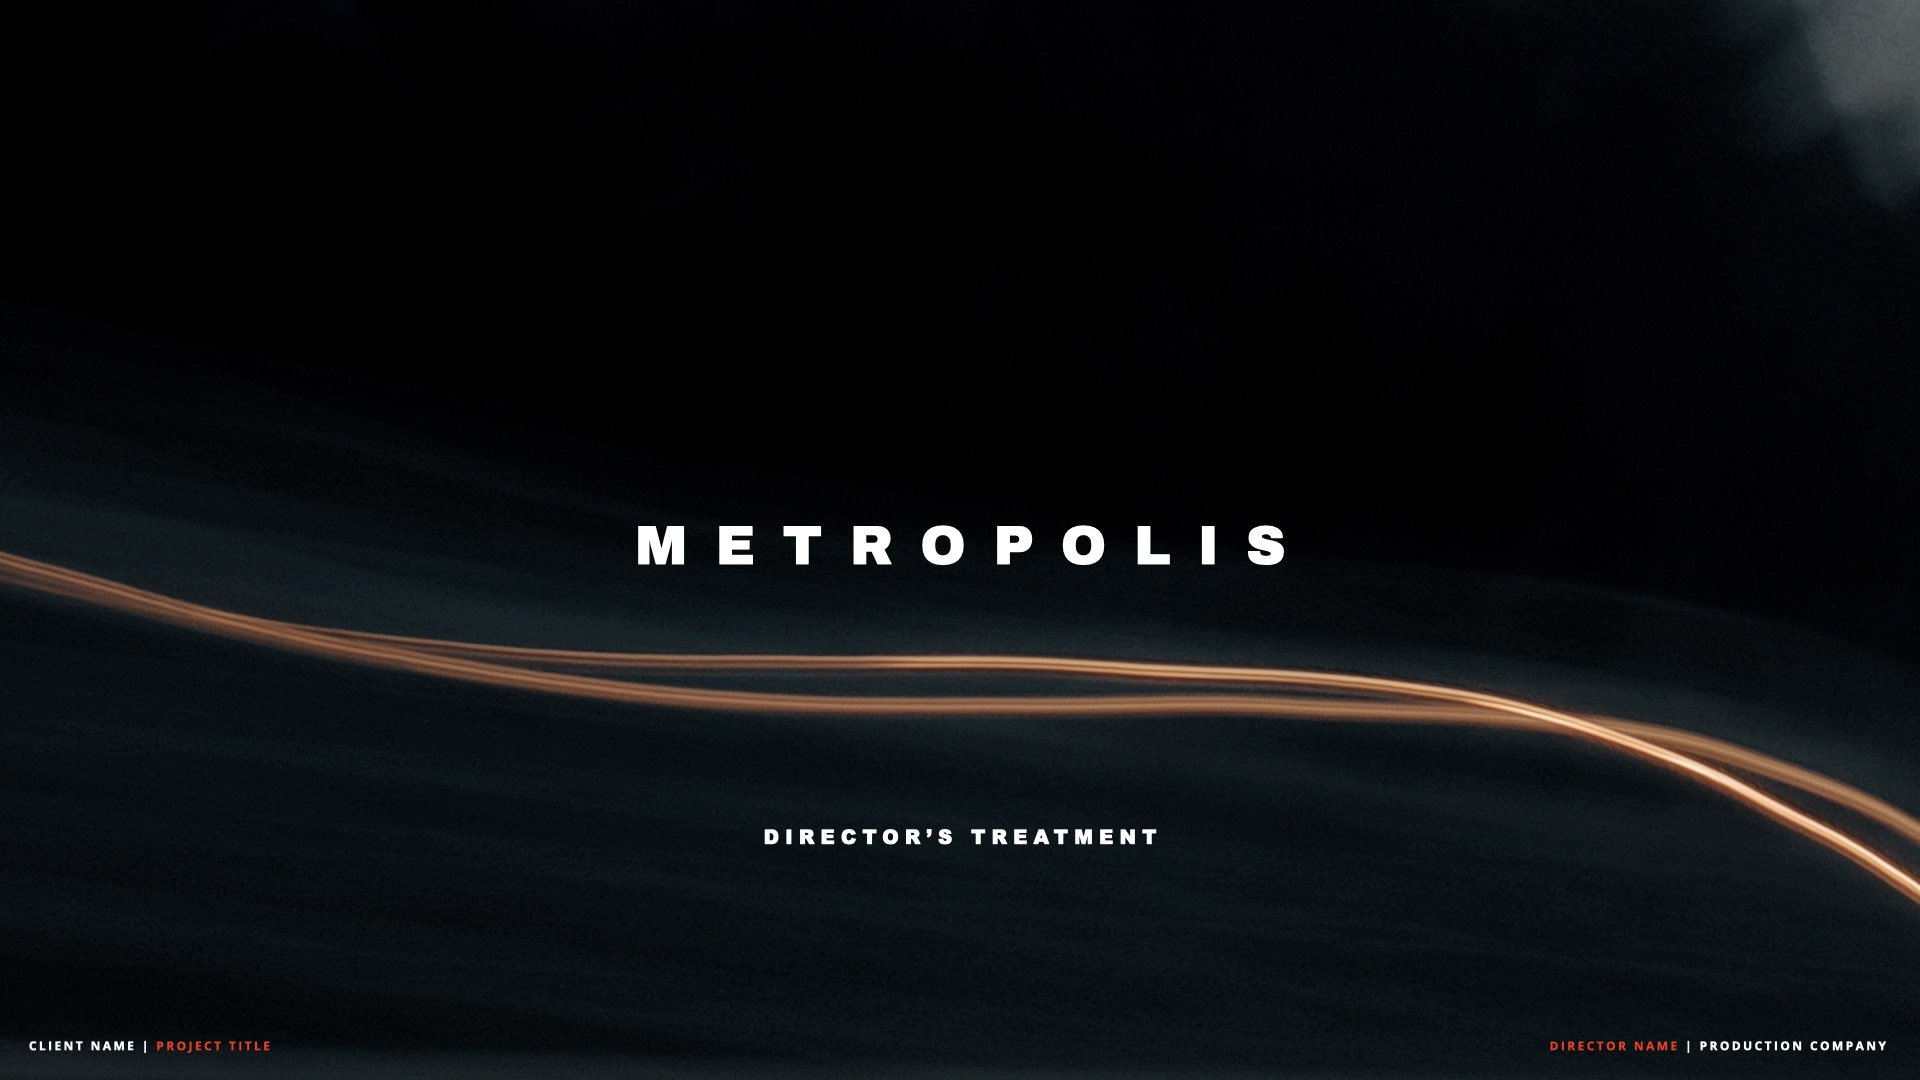 ‎Director Treatment Template - Metropolis.‎001.jpeg